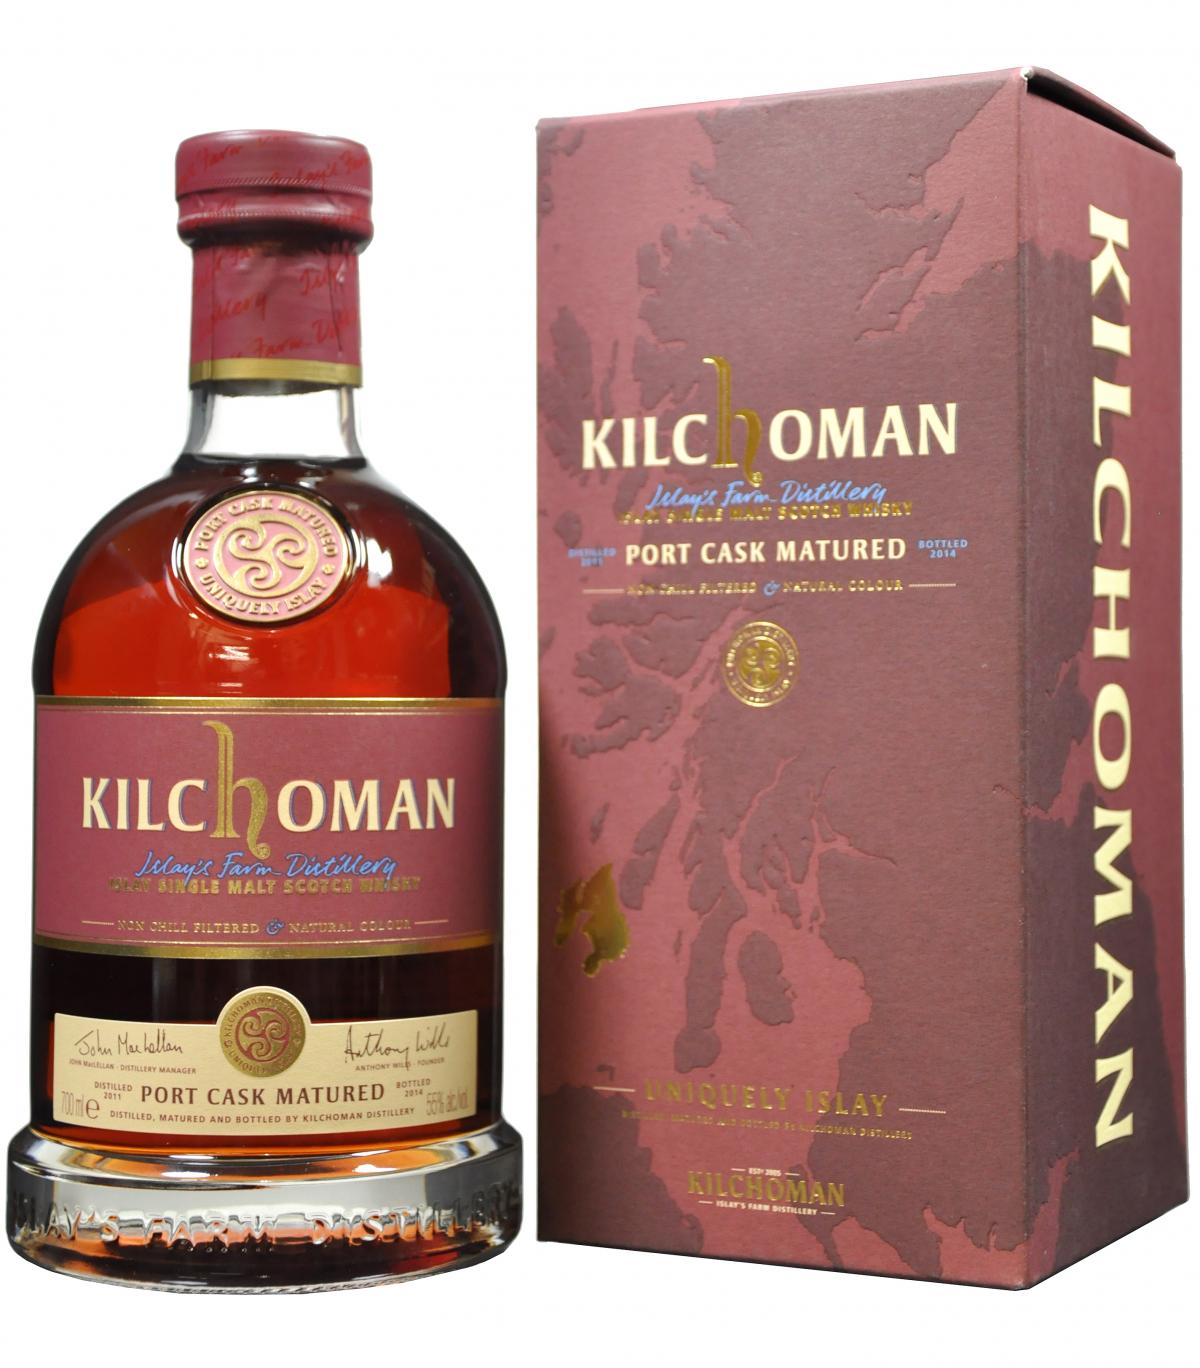 Kilchoman 2011-2014, port cask matured, islay single malt scotch whisky